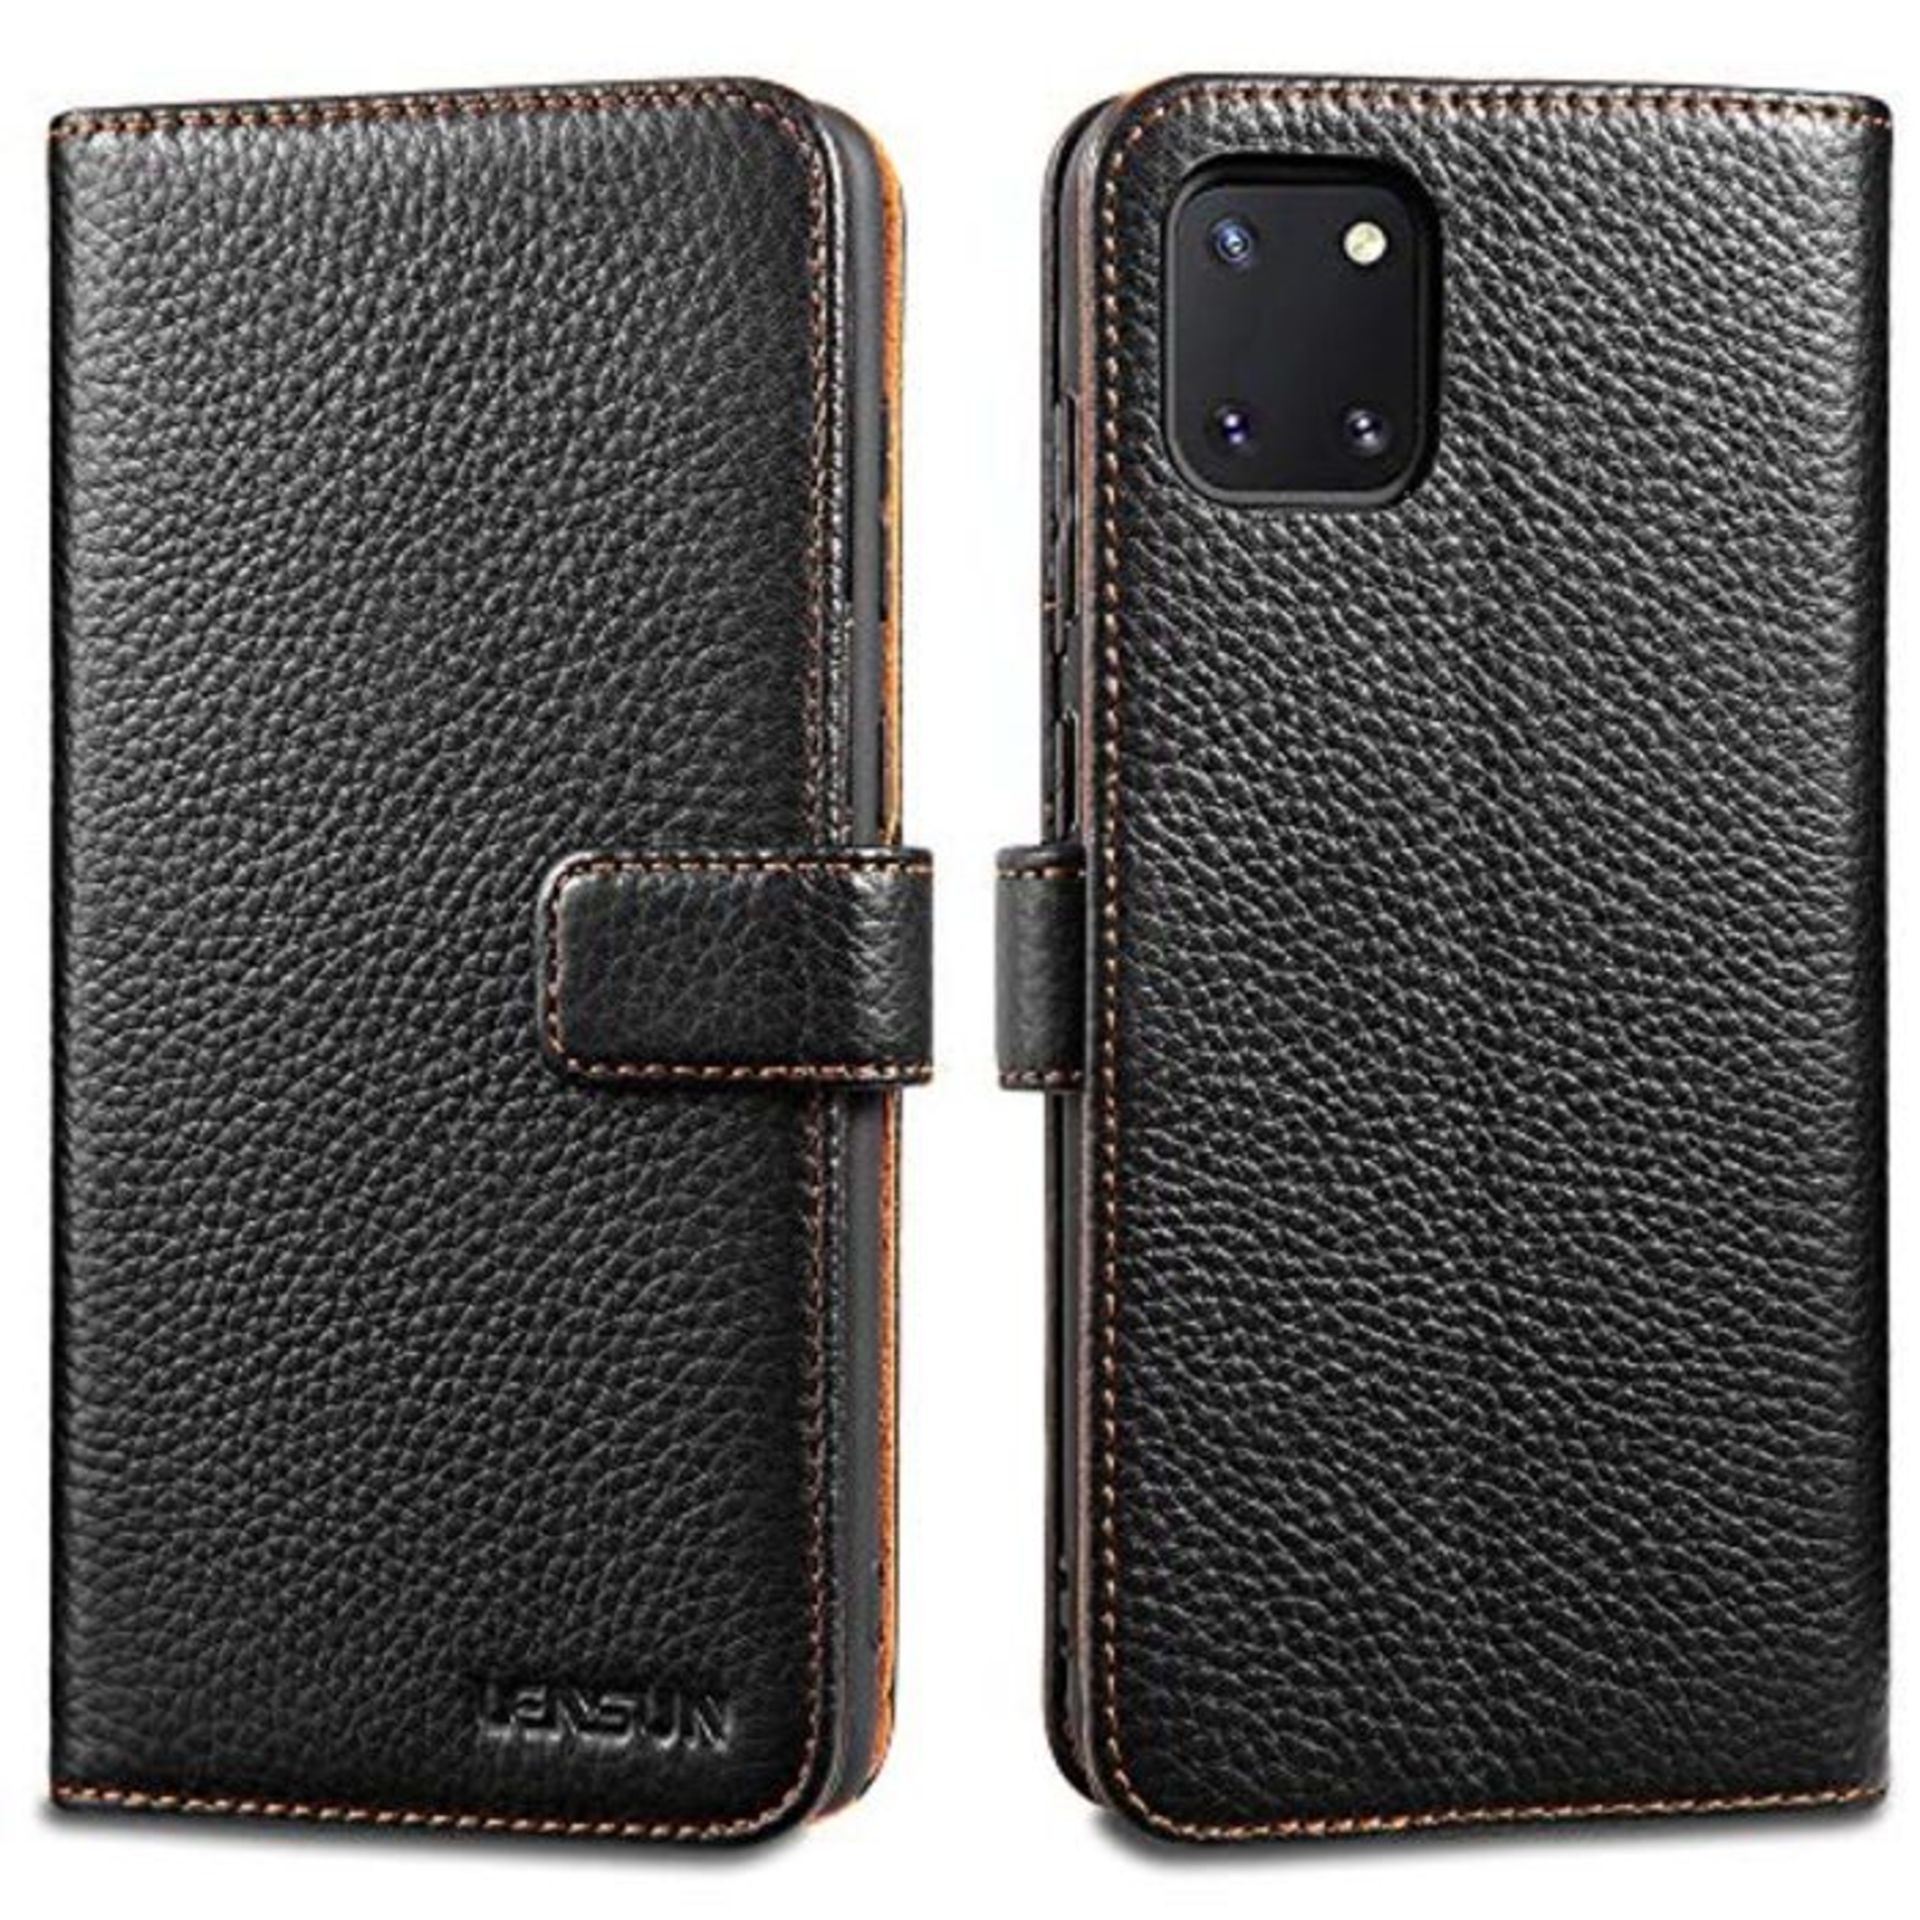 LENSUN Samsung Galaxy Note 10 Lite Leather Case, Flip Genuine Leather Wallet Phone Cas